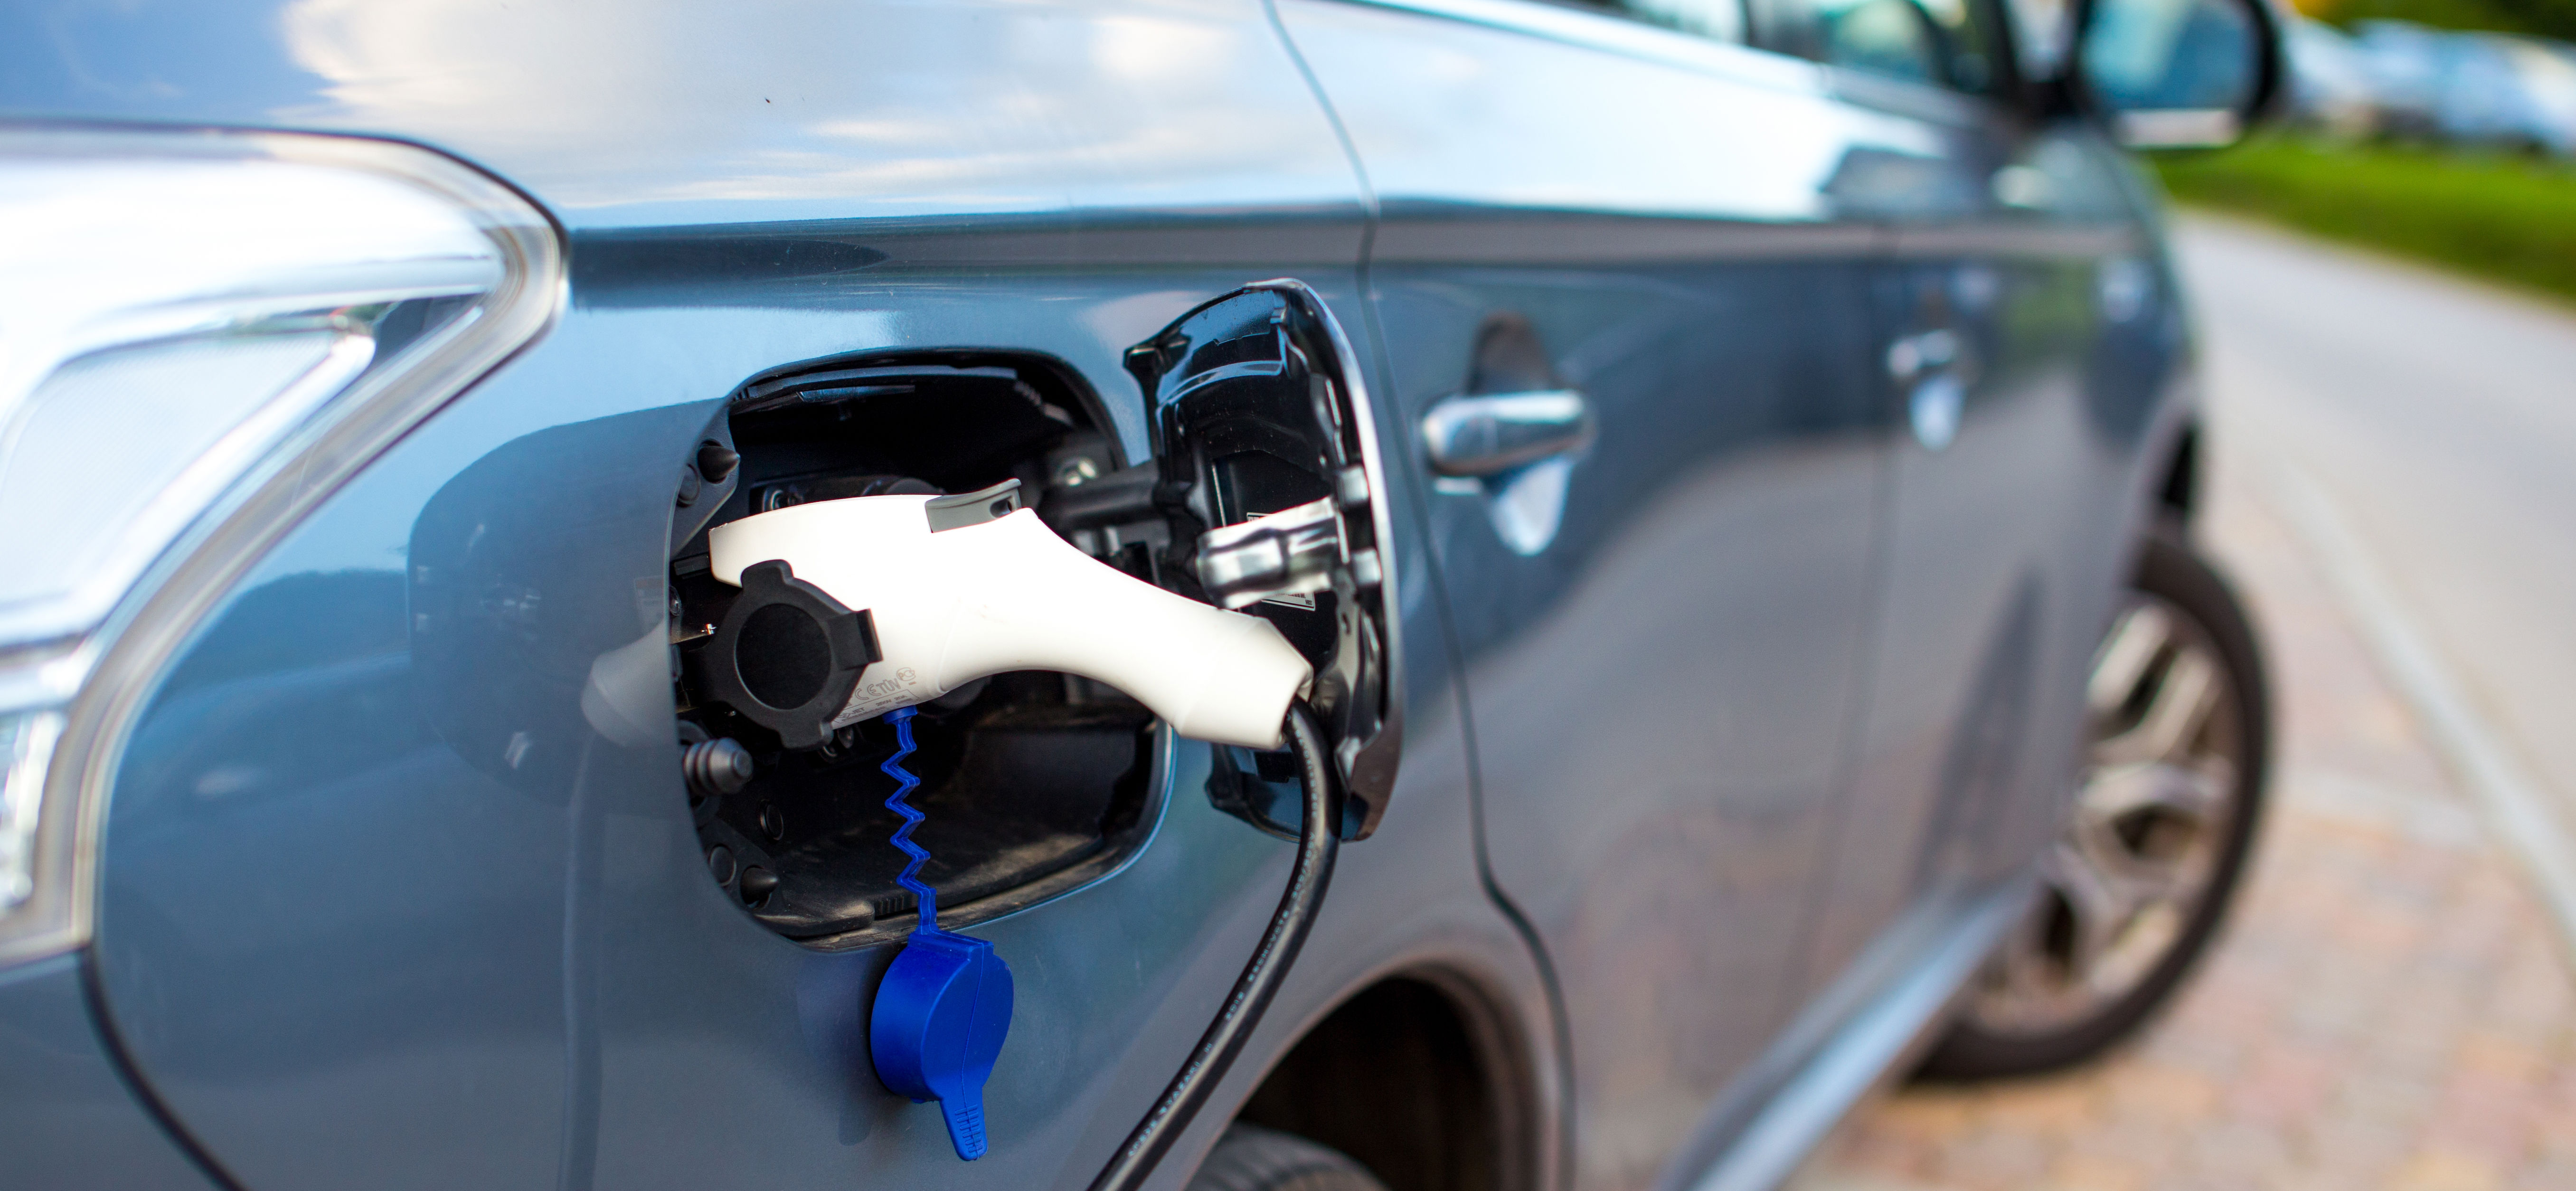 Australian Electric Vehicle Market Study Clean Energy Finance Corporation